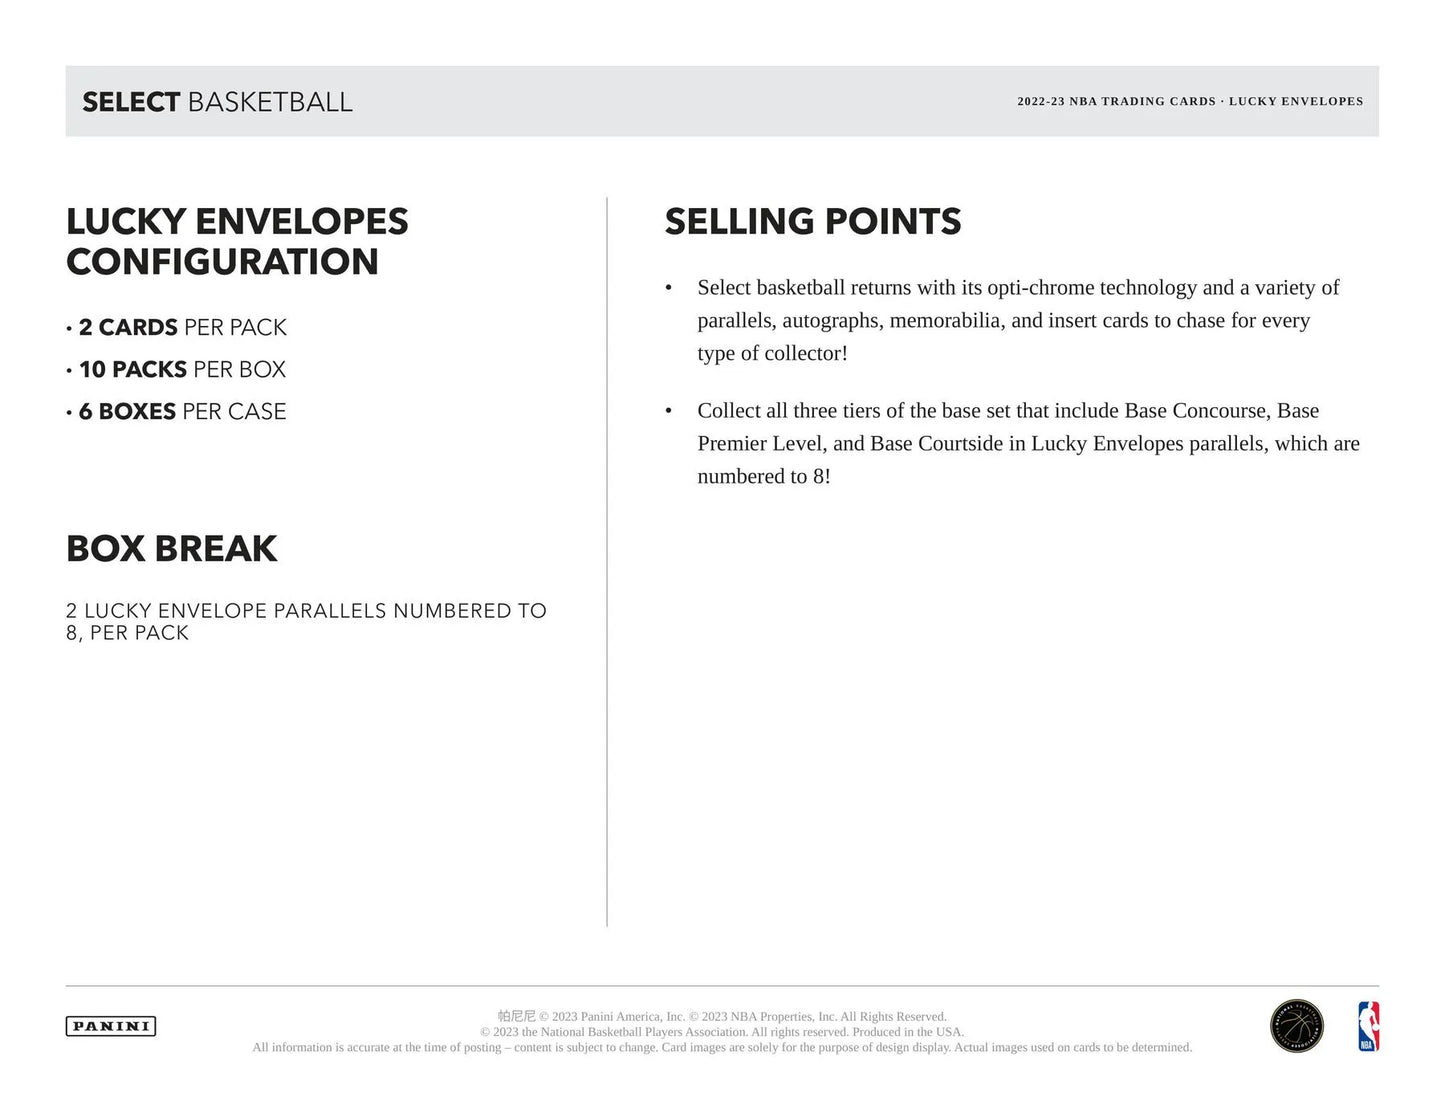 2022/23 Panini Select Basketball Lucky Envelopes 10-Pack Box